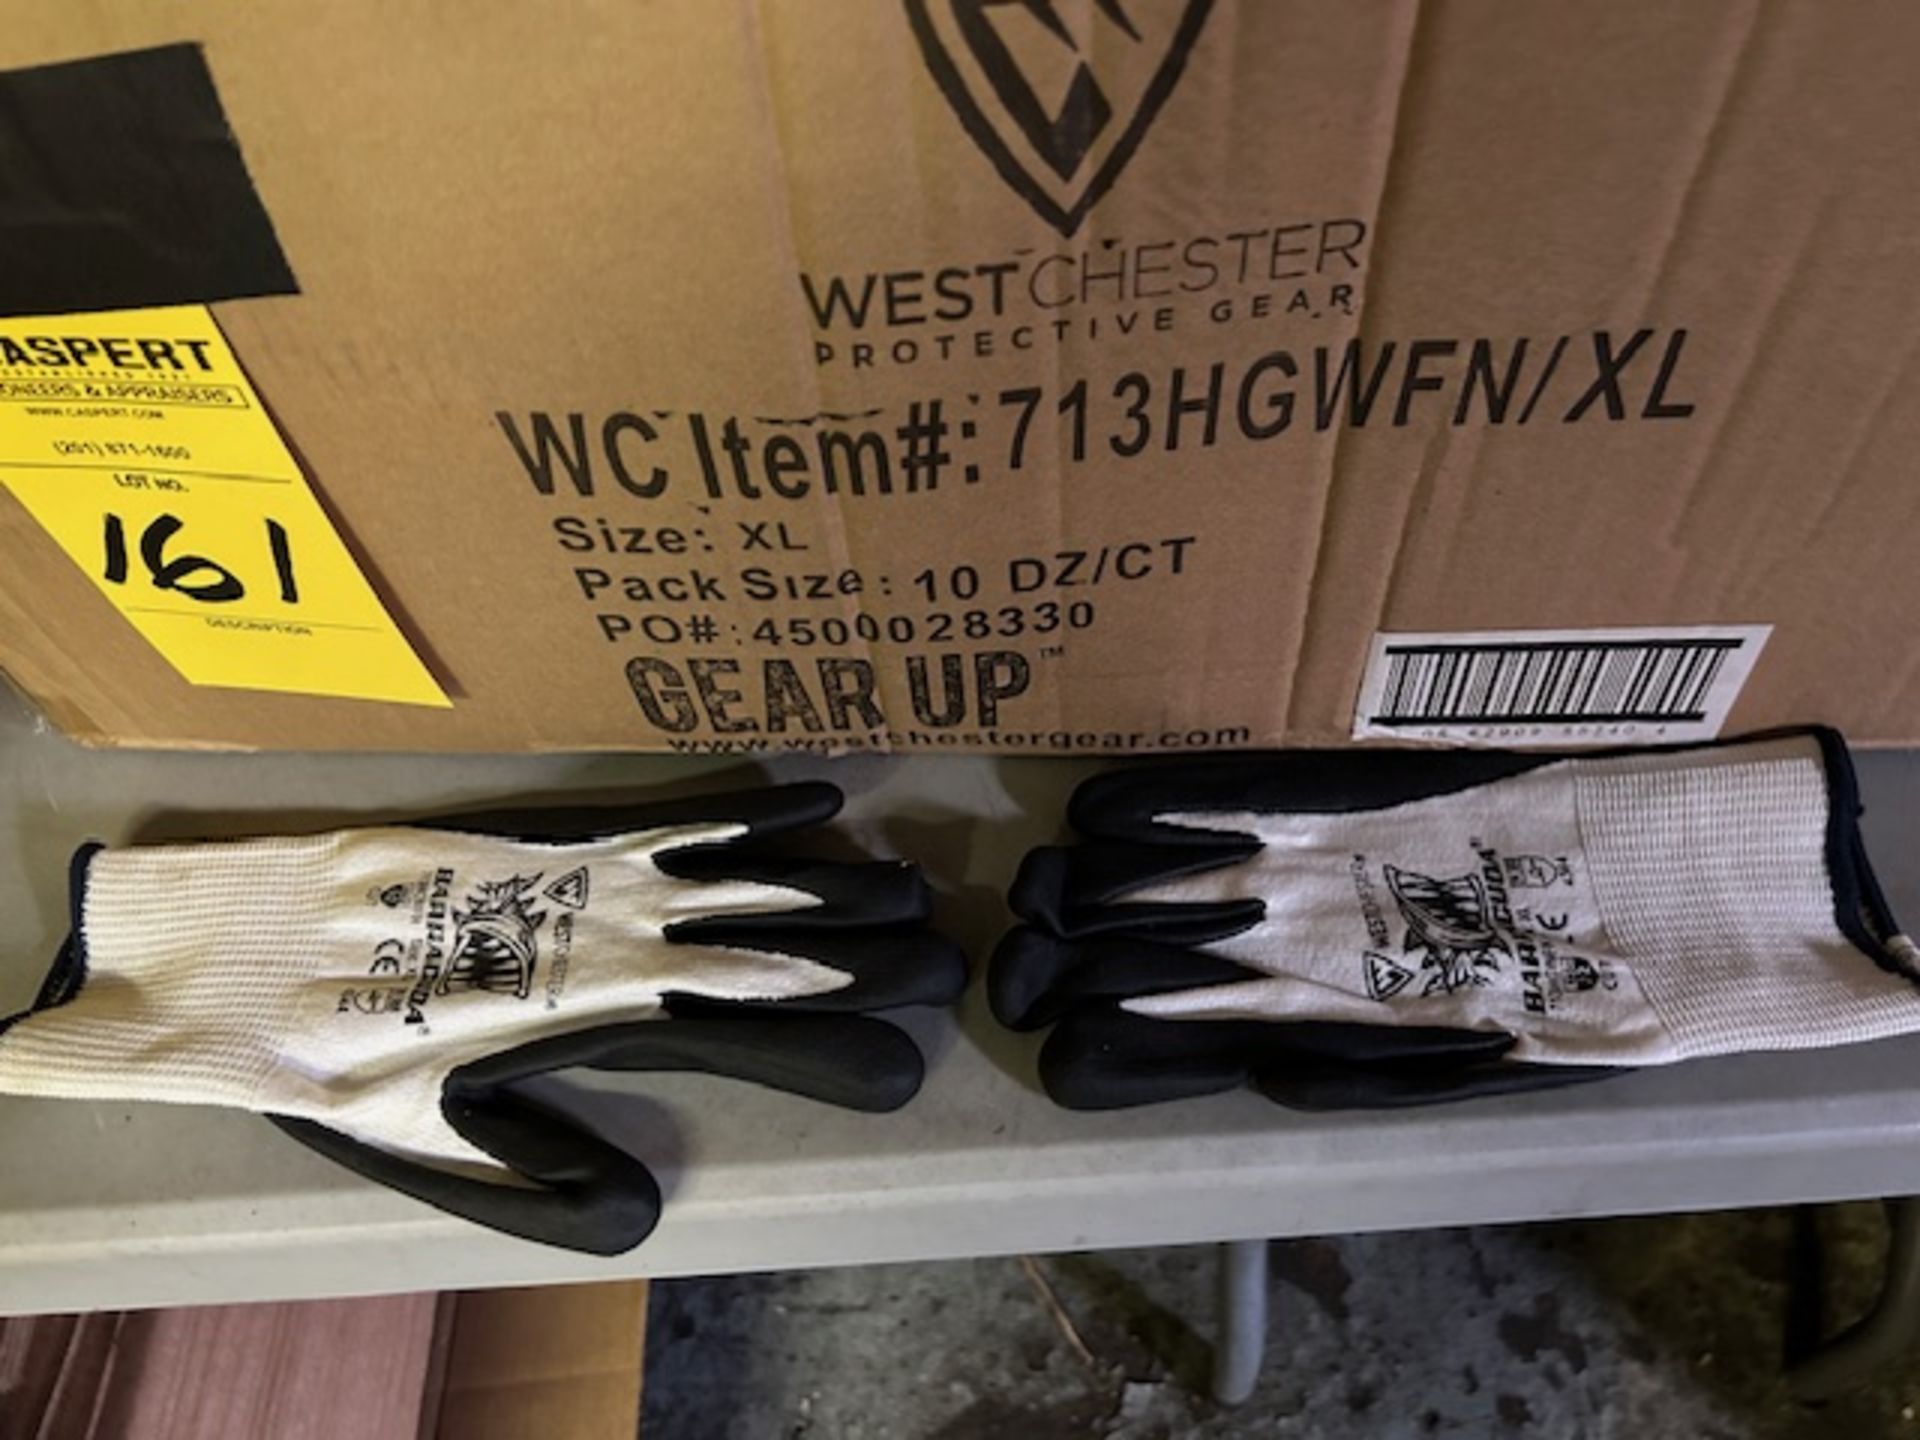 (15) Dozen - Pairs of Westchester #713HGWFN /XL Heavy Duty Barracuda Gloves